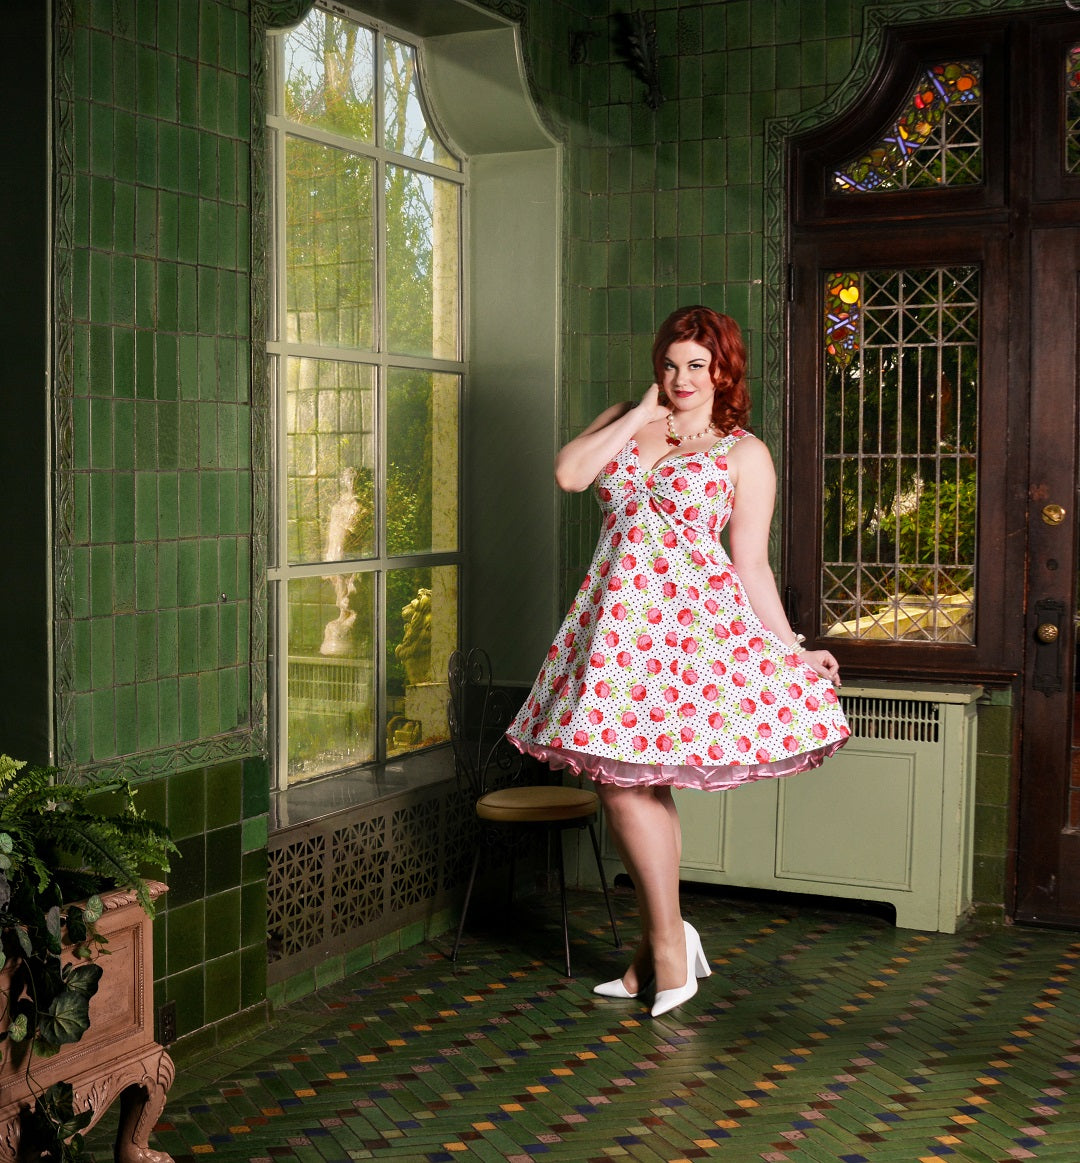 Model Ruby Roxx wearing a Cherry Velvet dress at Hycroft Manor